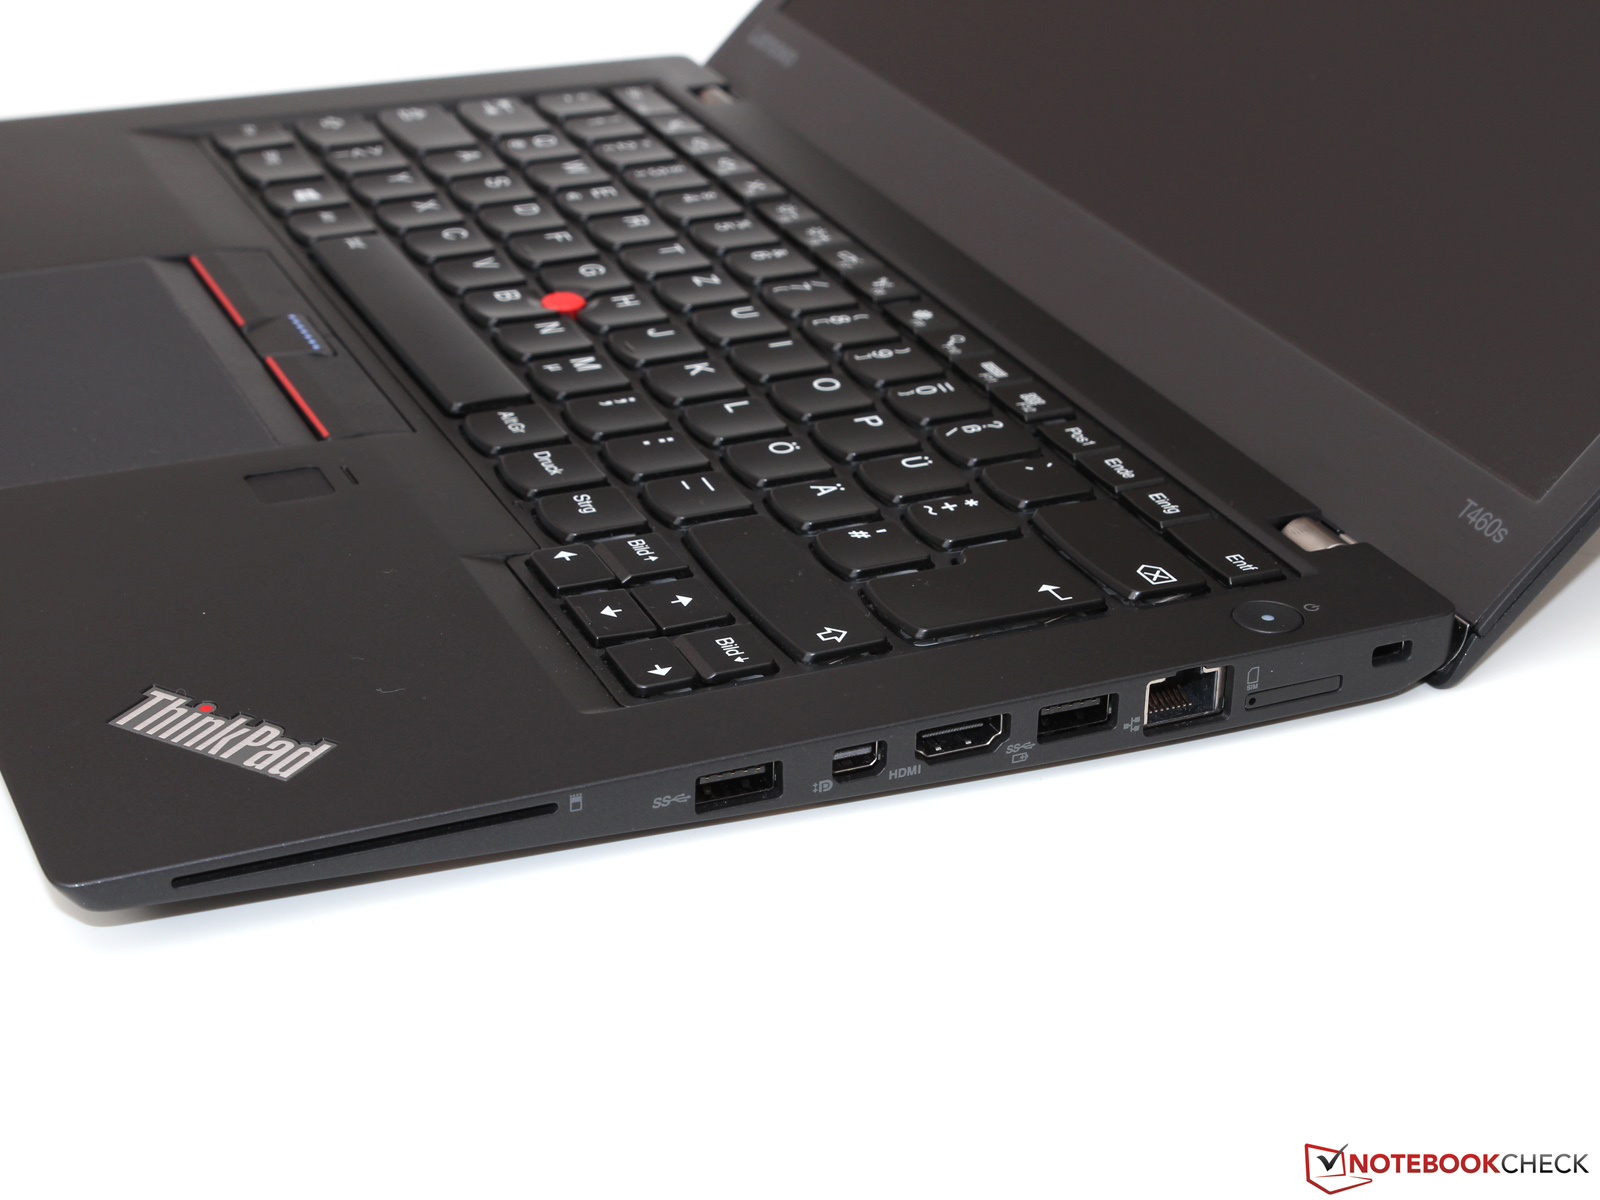 Lenovo ThinkPad T460s (Core i5, Full HD) Ultrabook Review